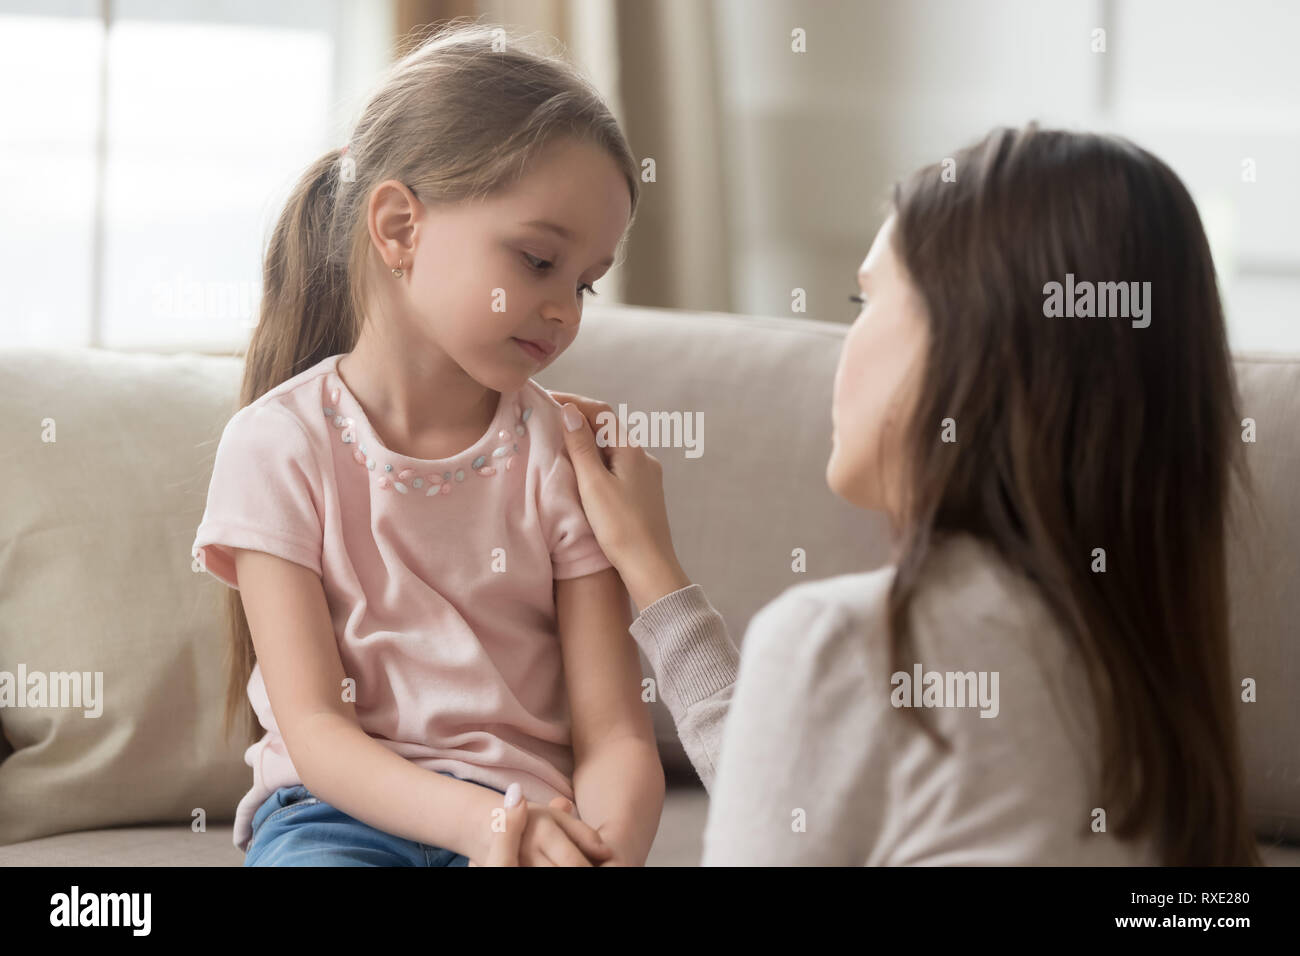 Loving mom talking to upset little child girl giving support Stock Photo